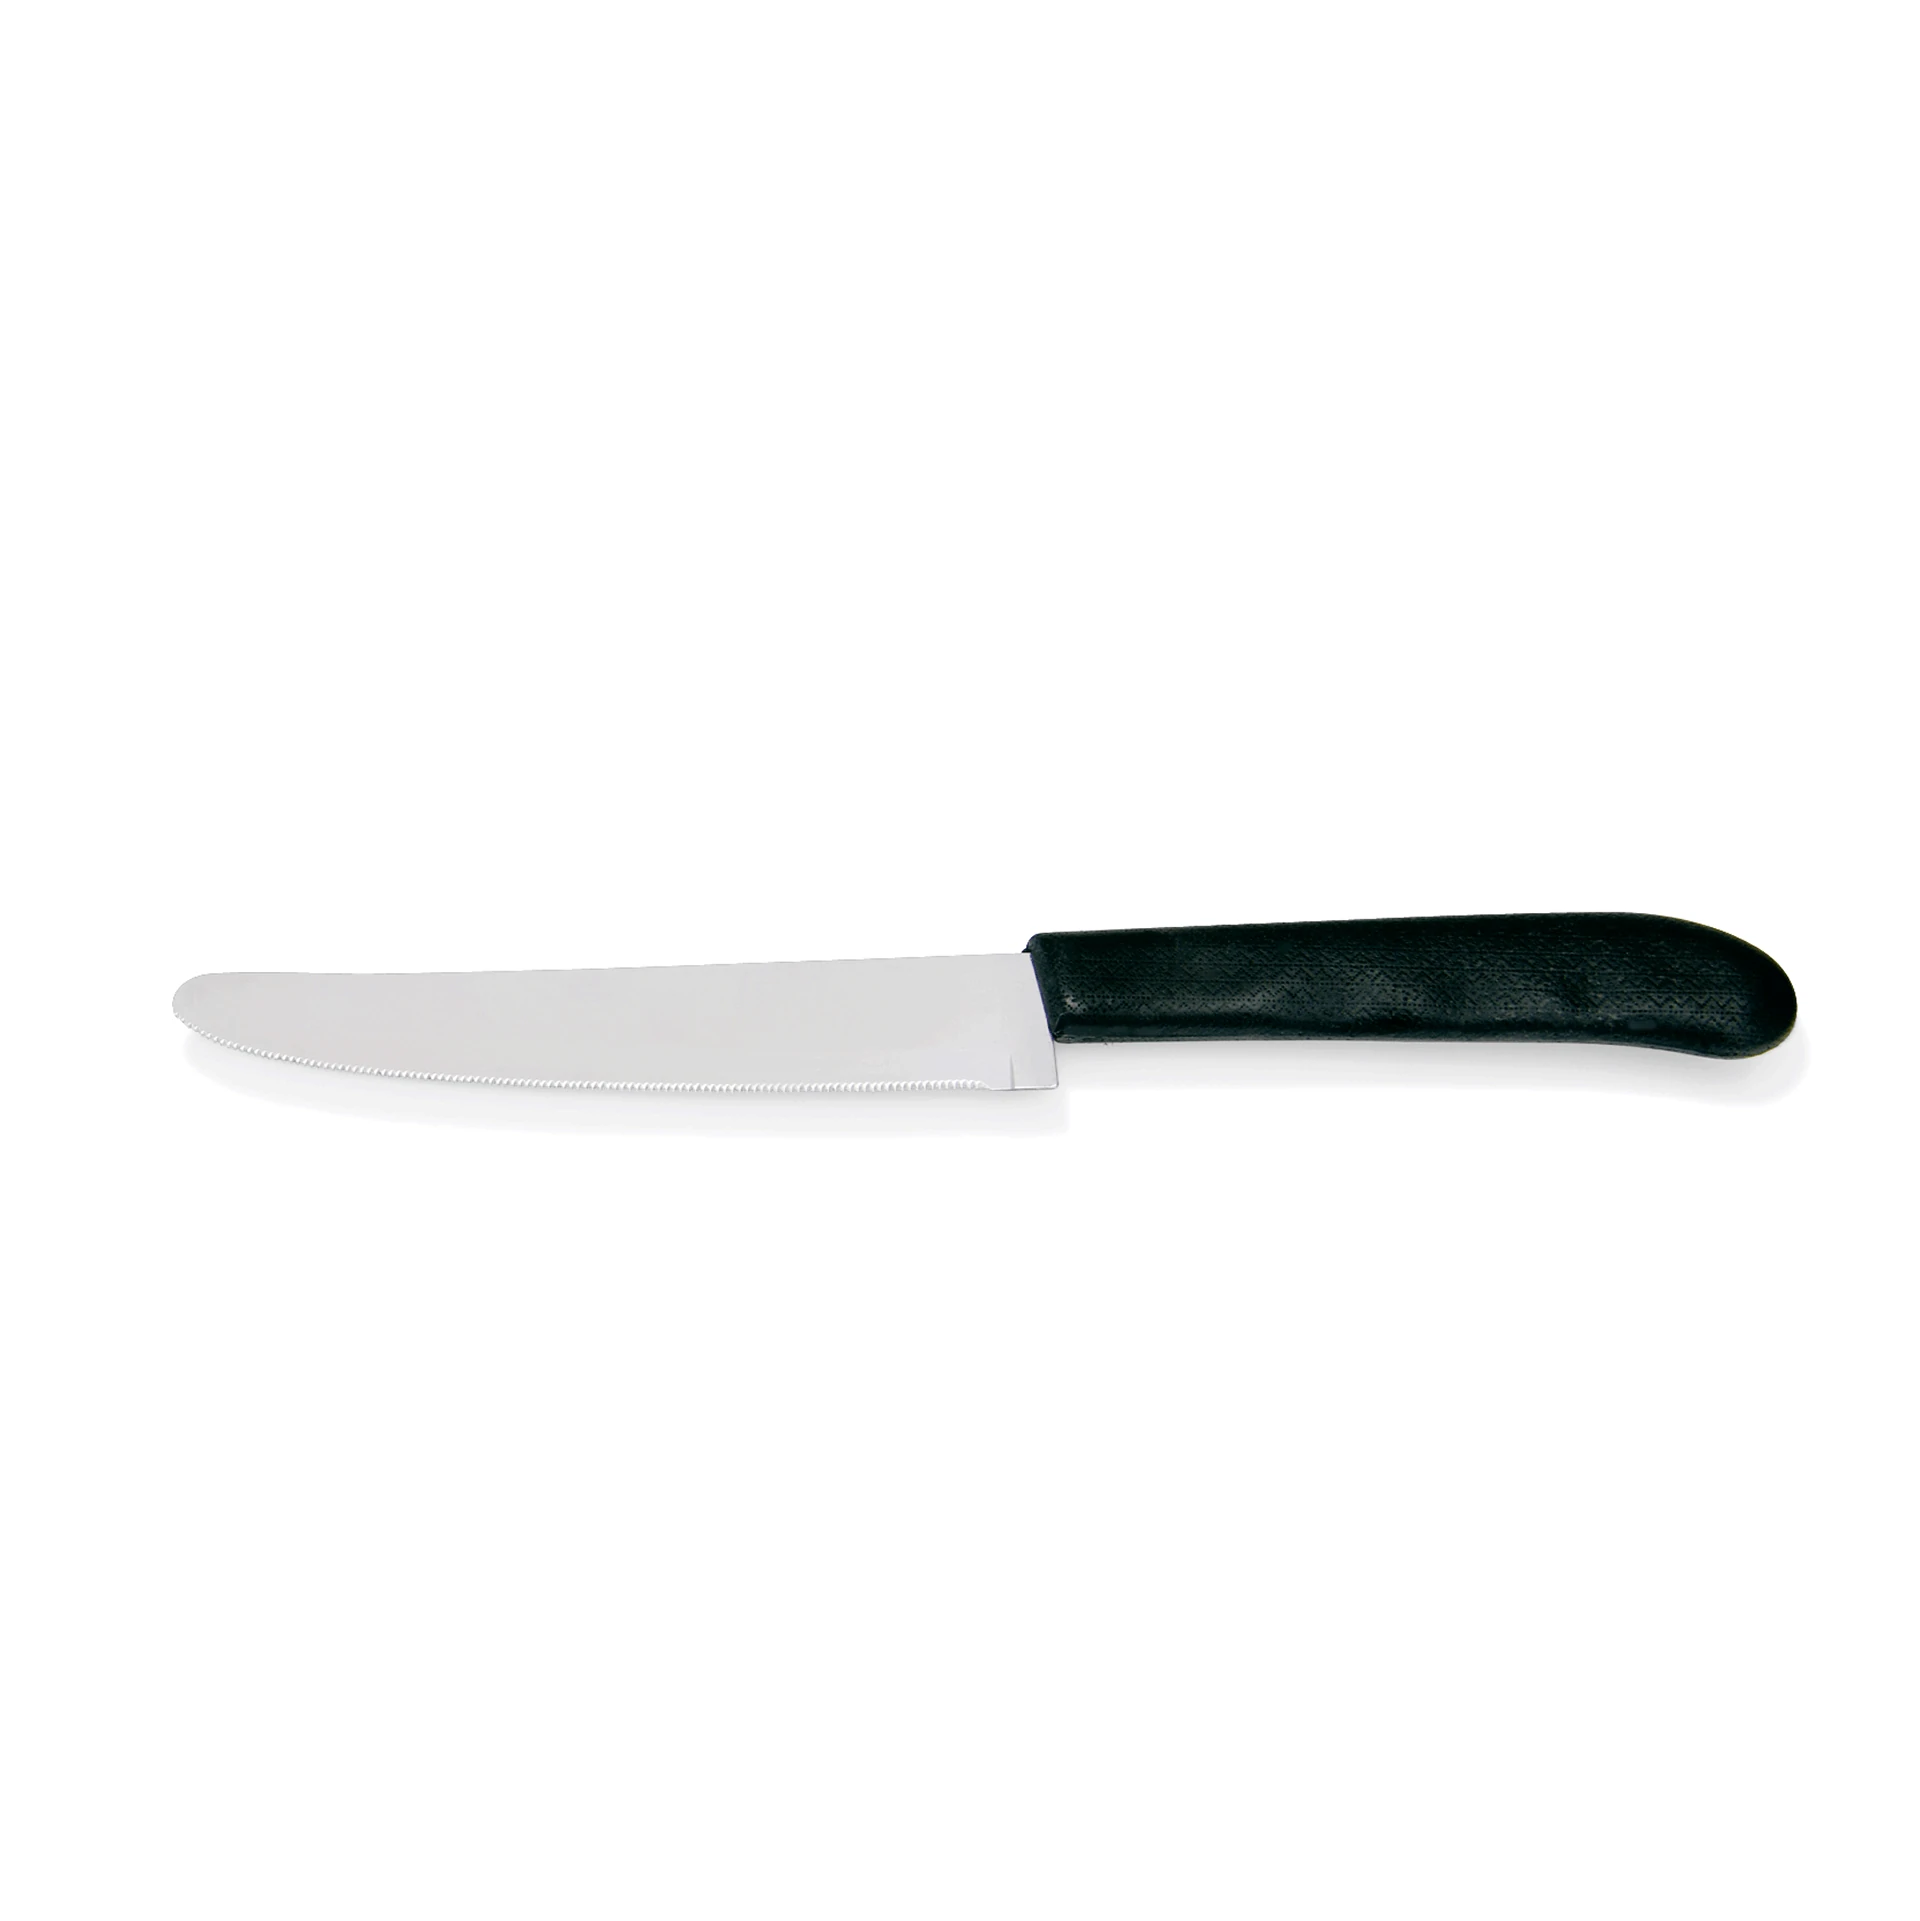 Utility/steak knife